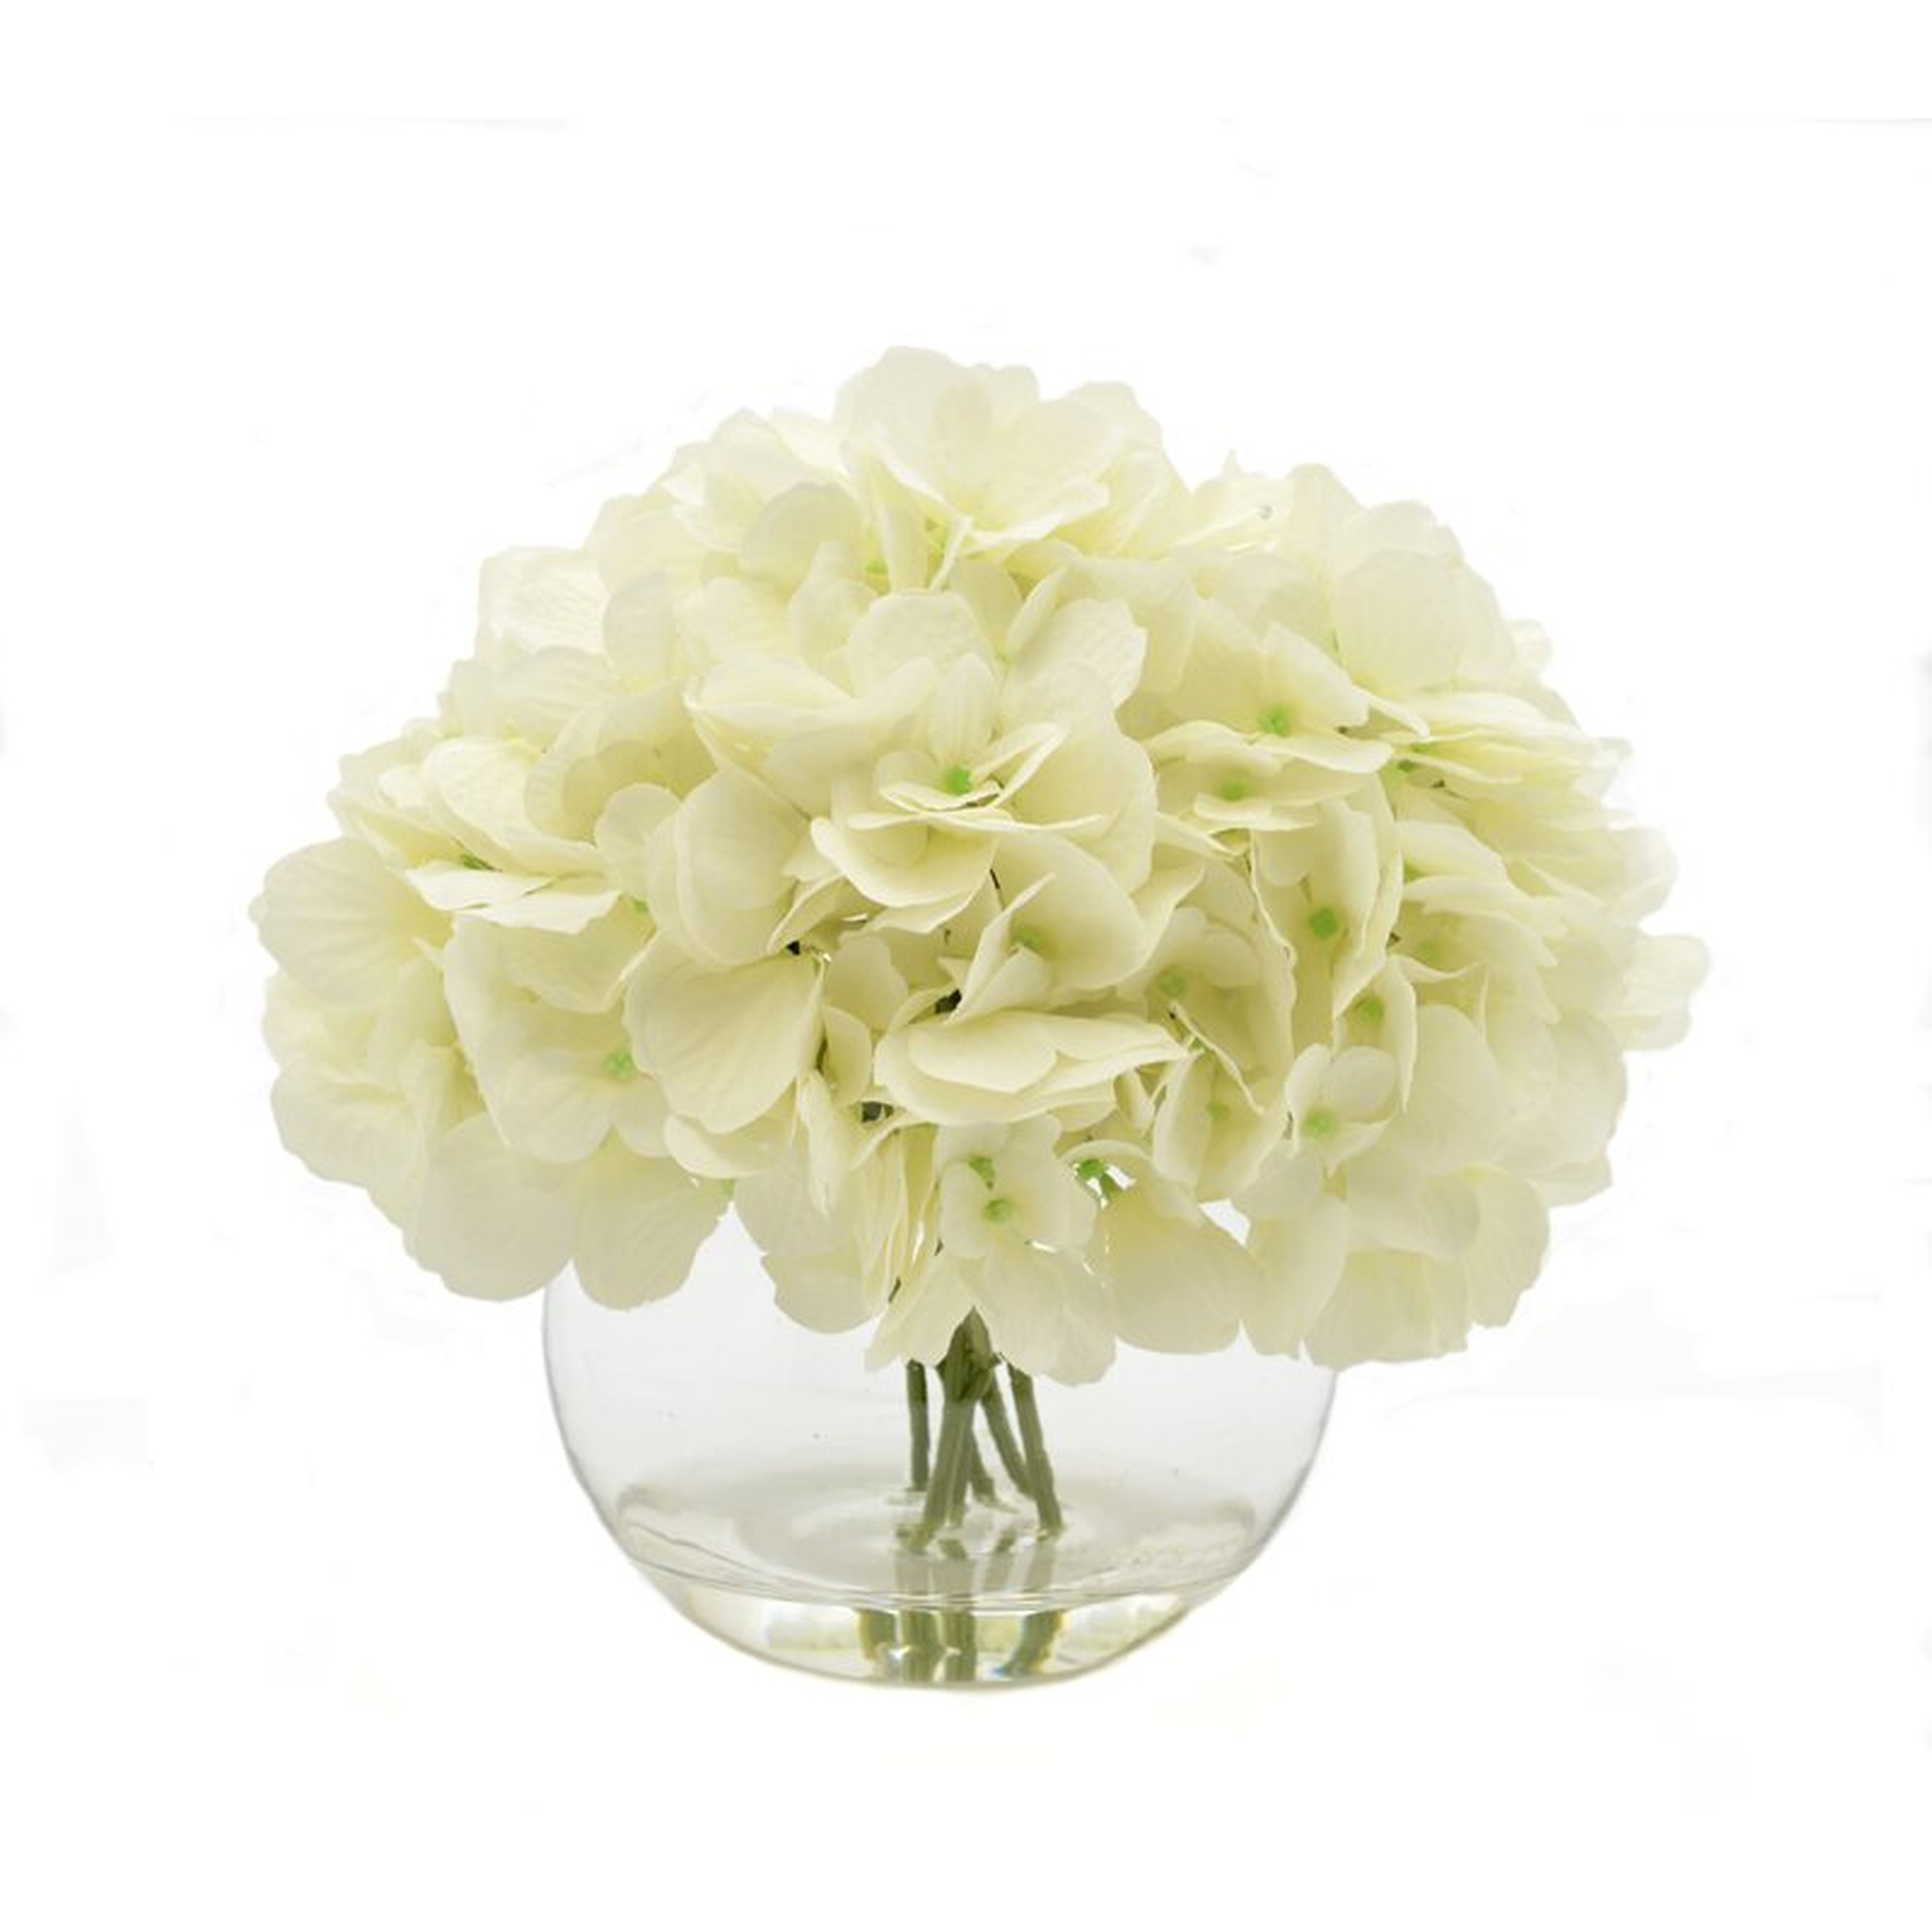 White Hydrangea Floral Arrangements - Wayfair